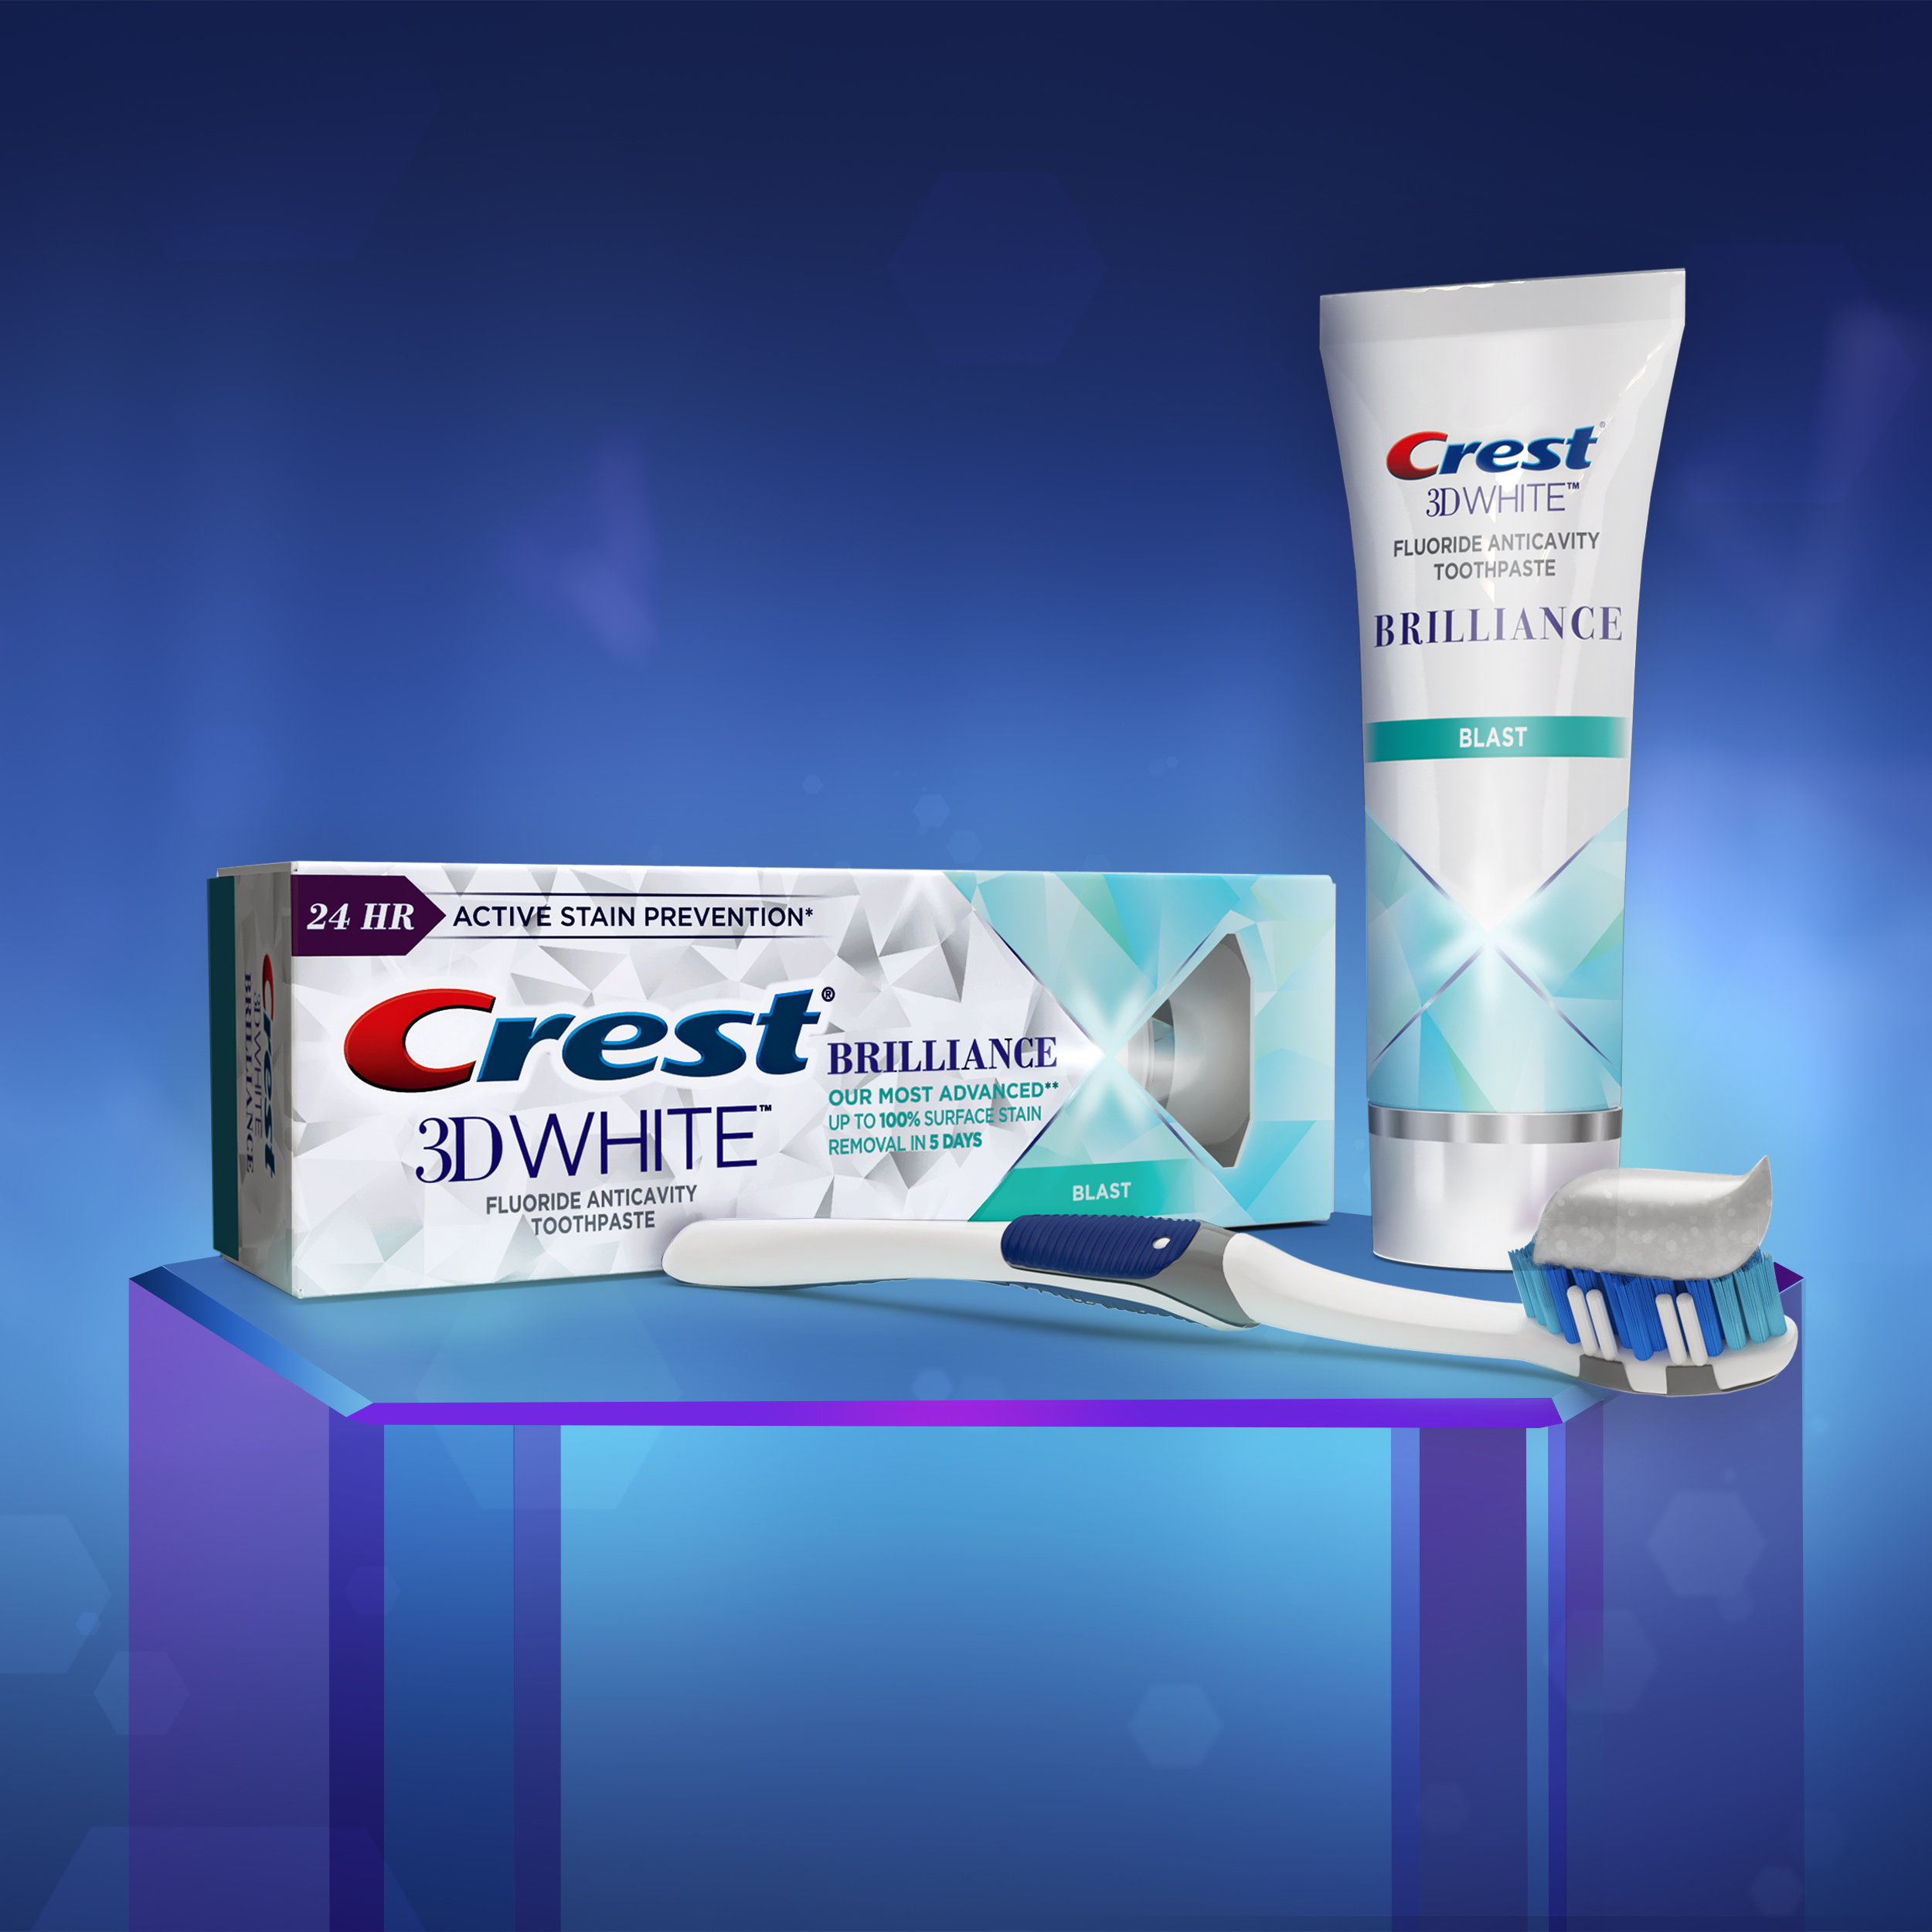 Crest 3D White Brilliance Blast Toothpaste, 3.9 oz - image 5 of 11